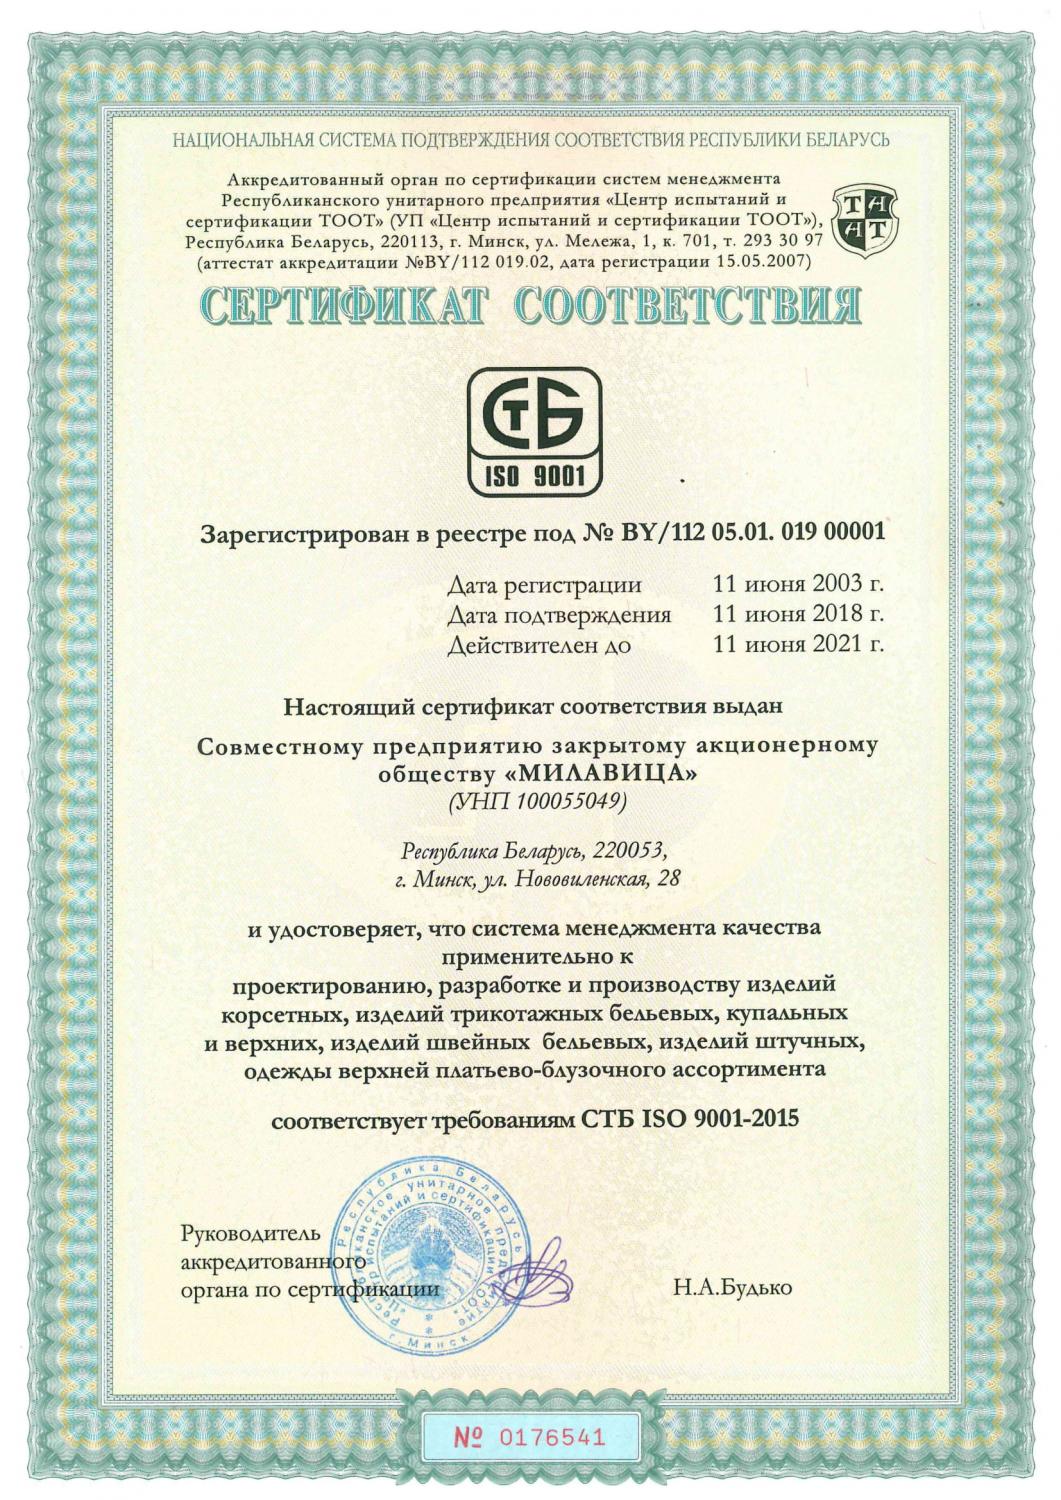 Сертификат милавица